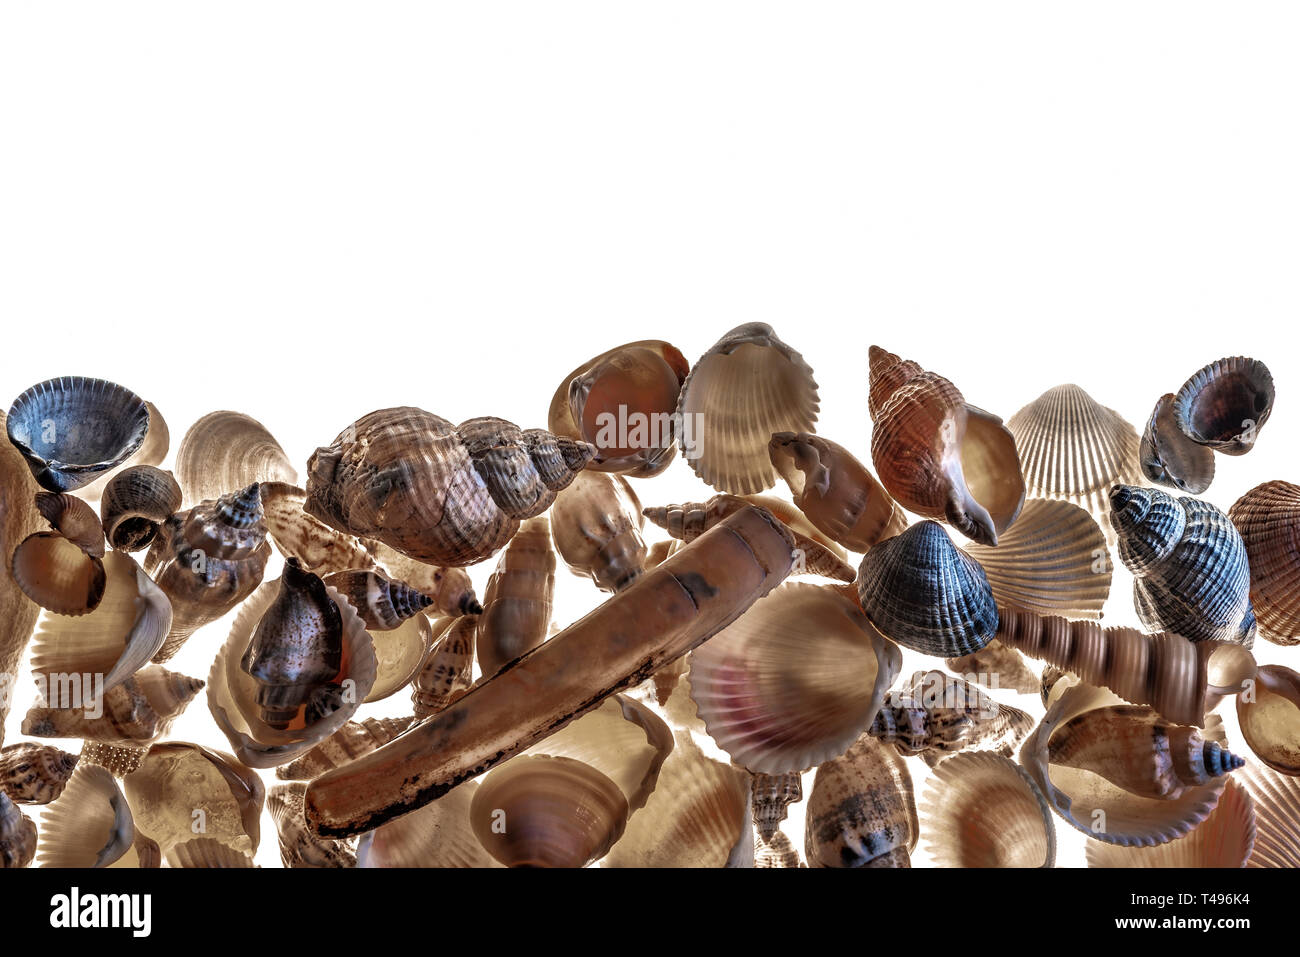 Una mezcla de variedad de conchas de mar. Antecedentes con una mezcla de diversas conchas, con espacio de copia. Foto de stock